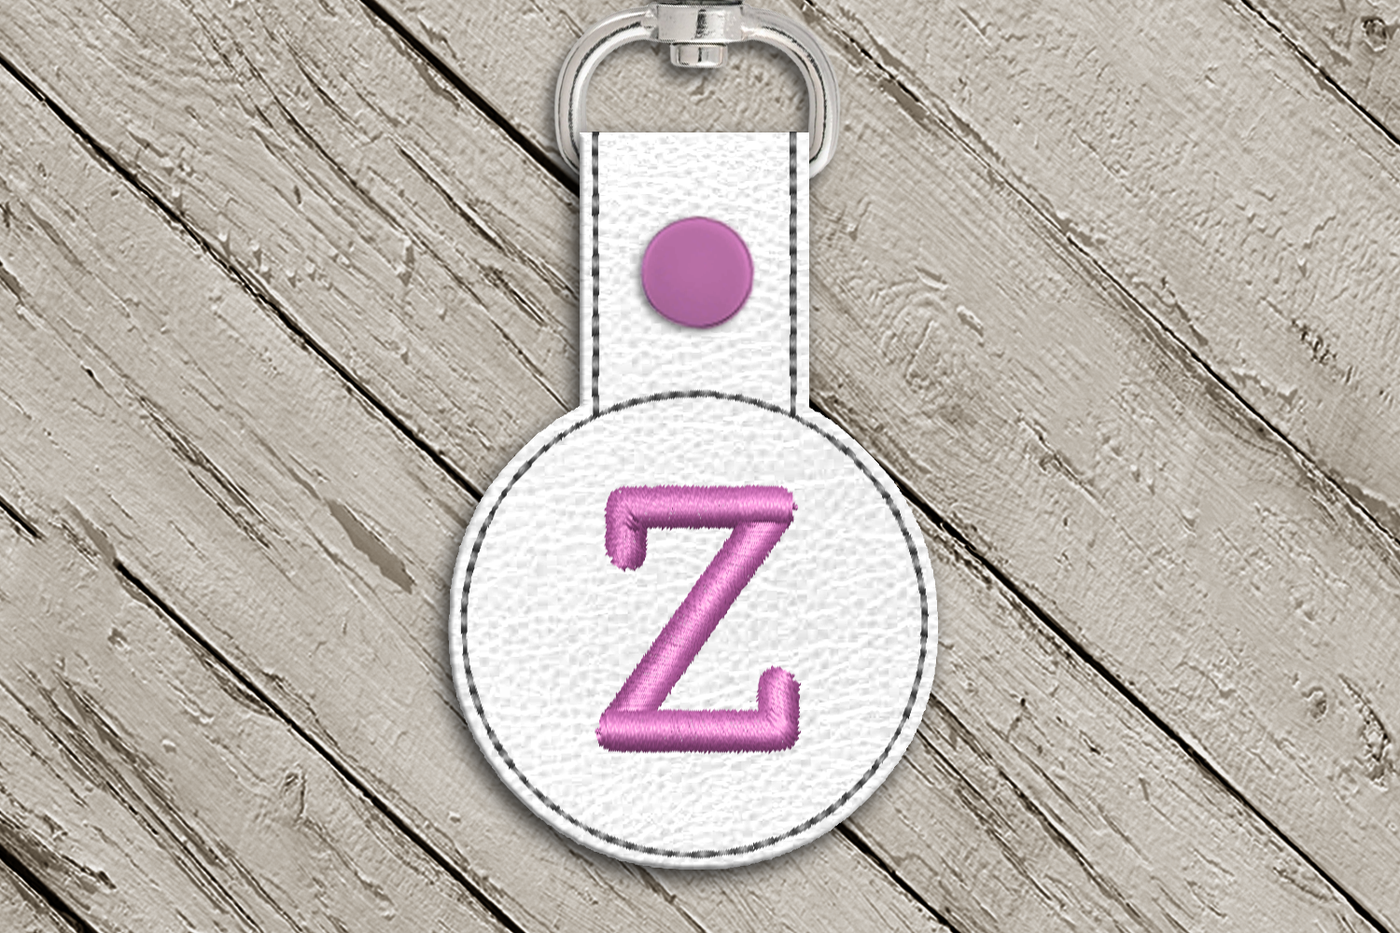 Letter Z in the hoop key fob design